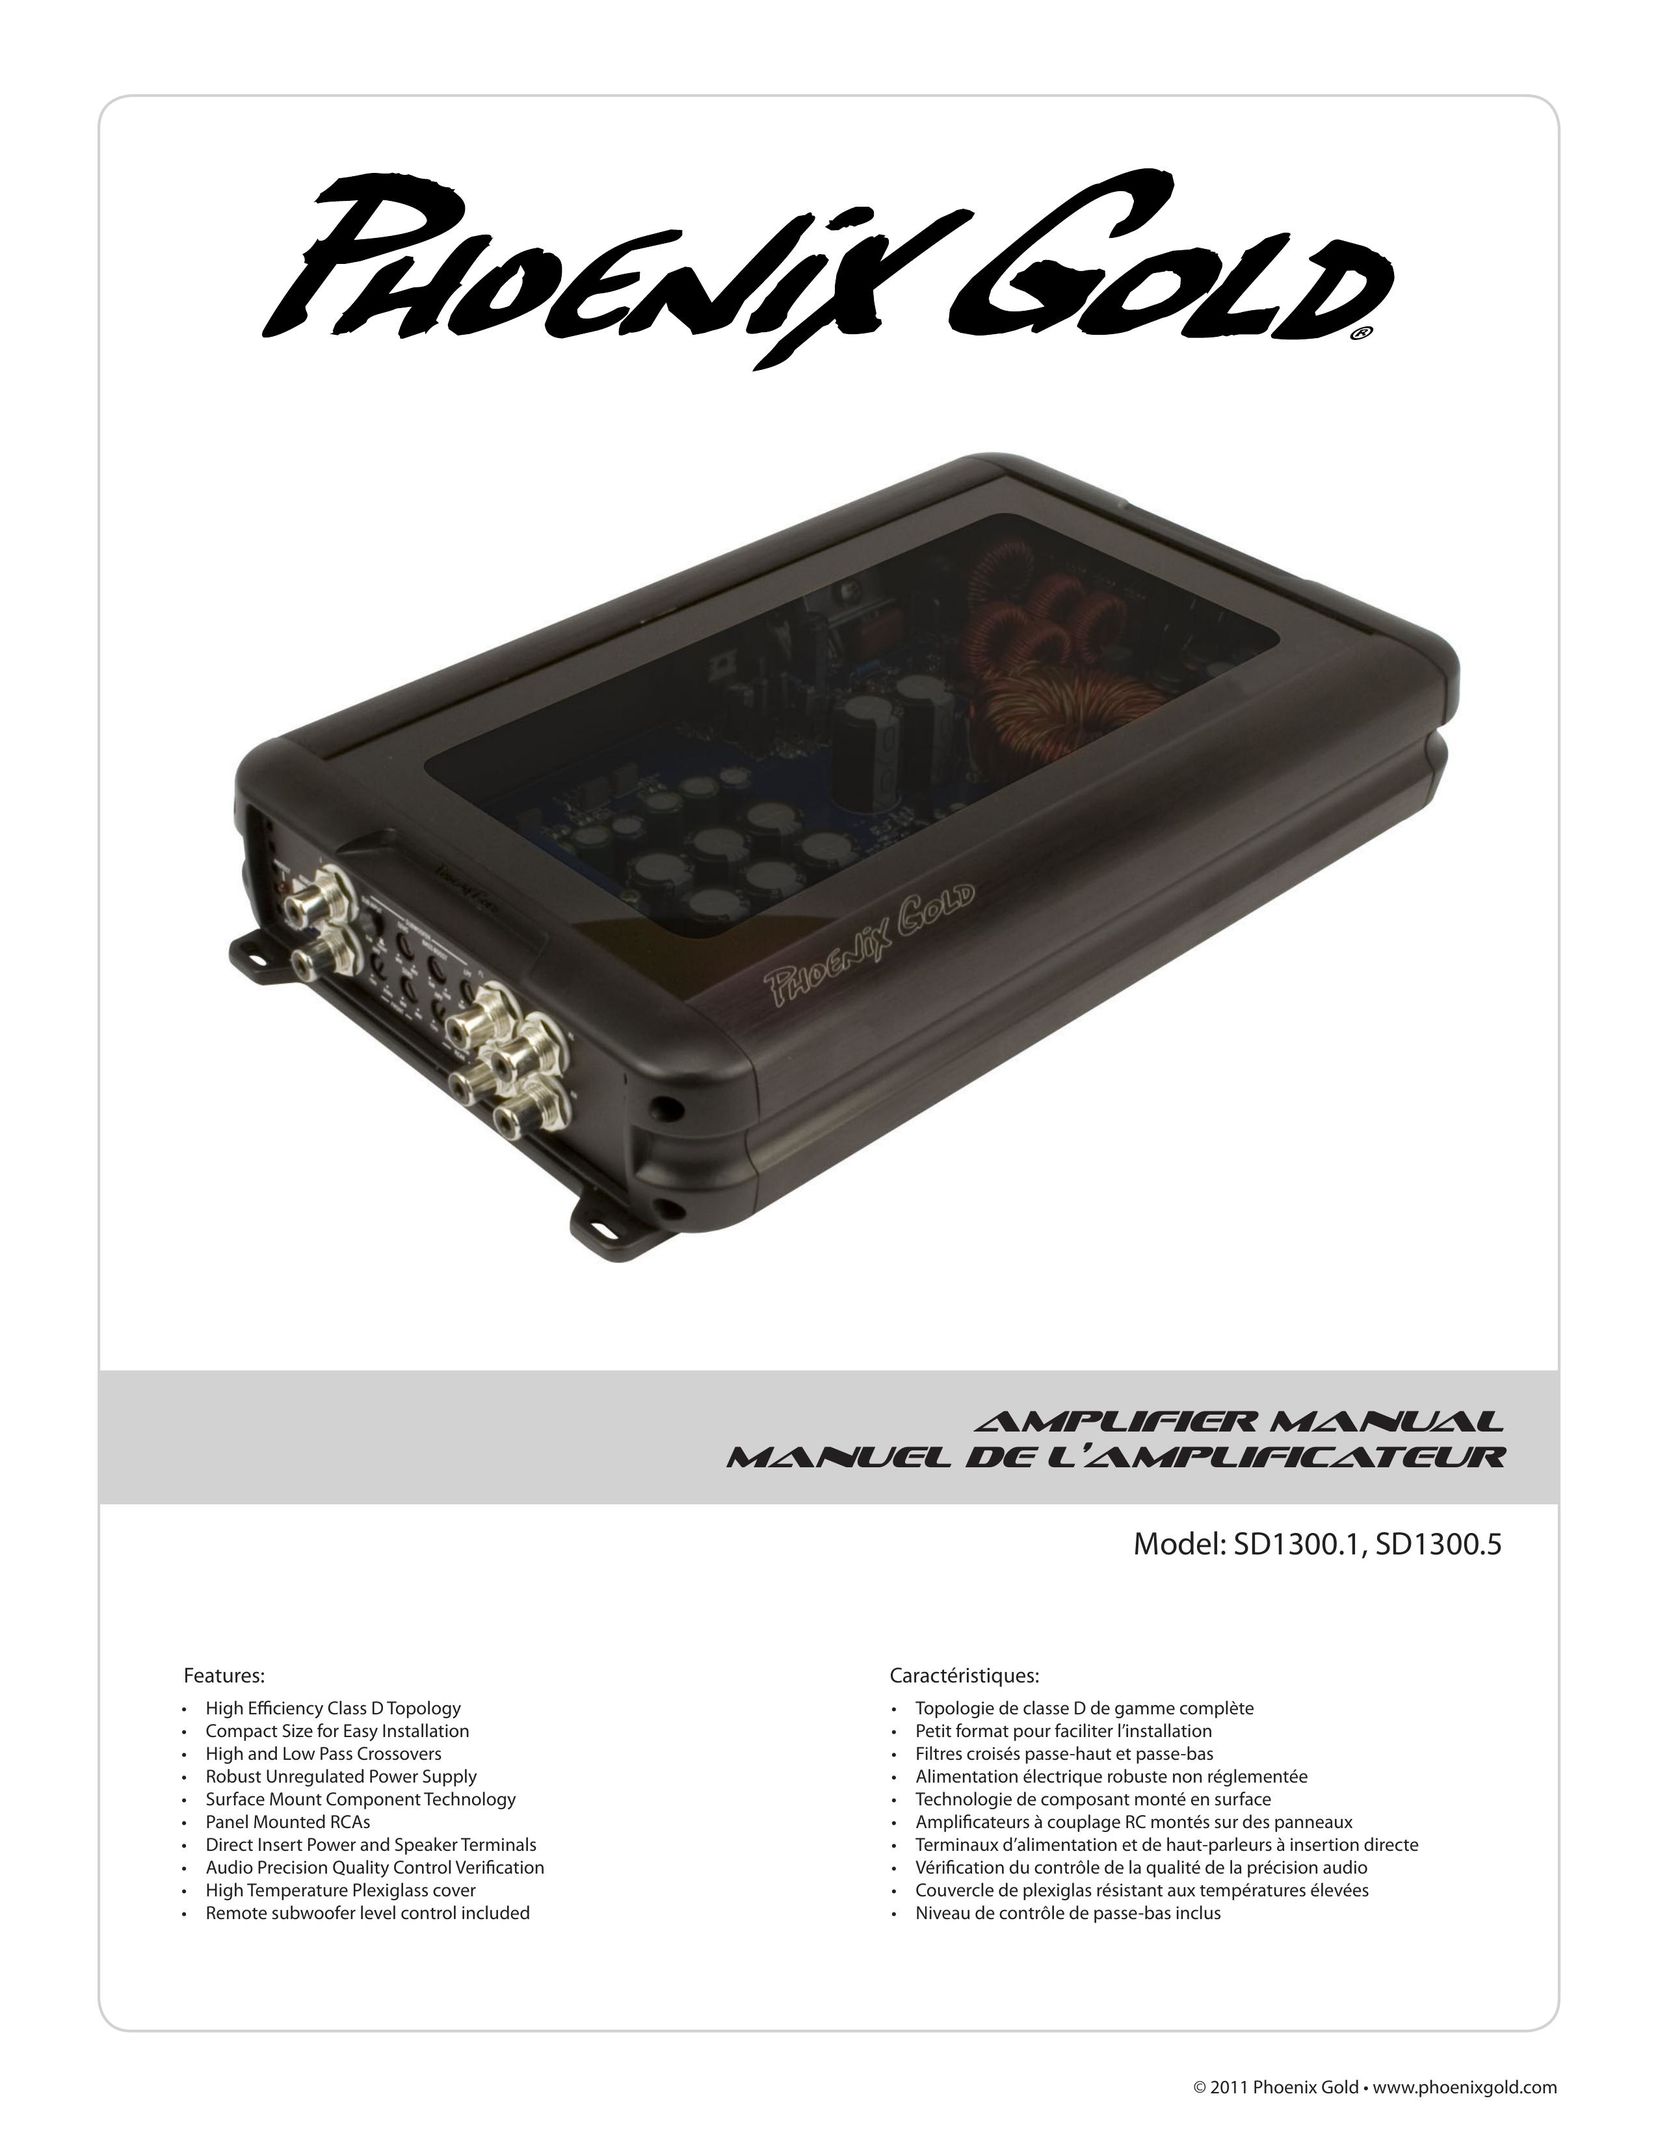 Phoenix Gold SD1300.5 Car Amplifier User Manual